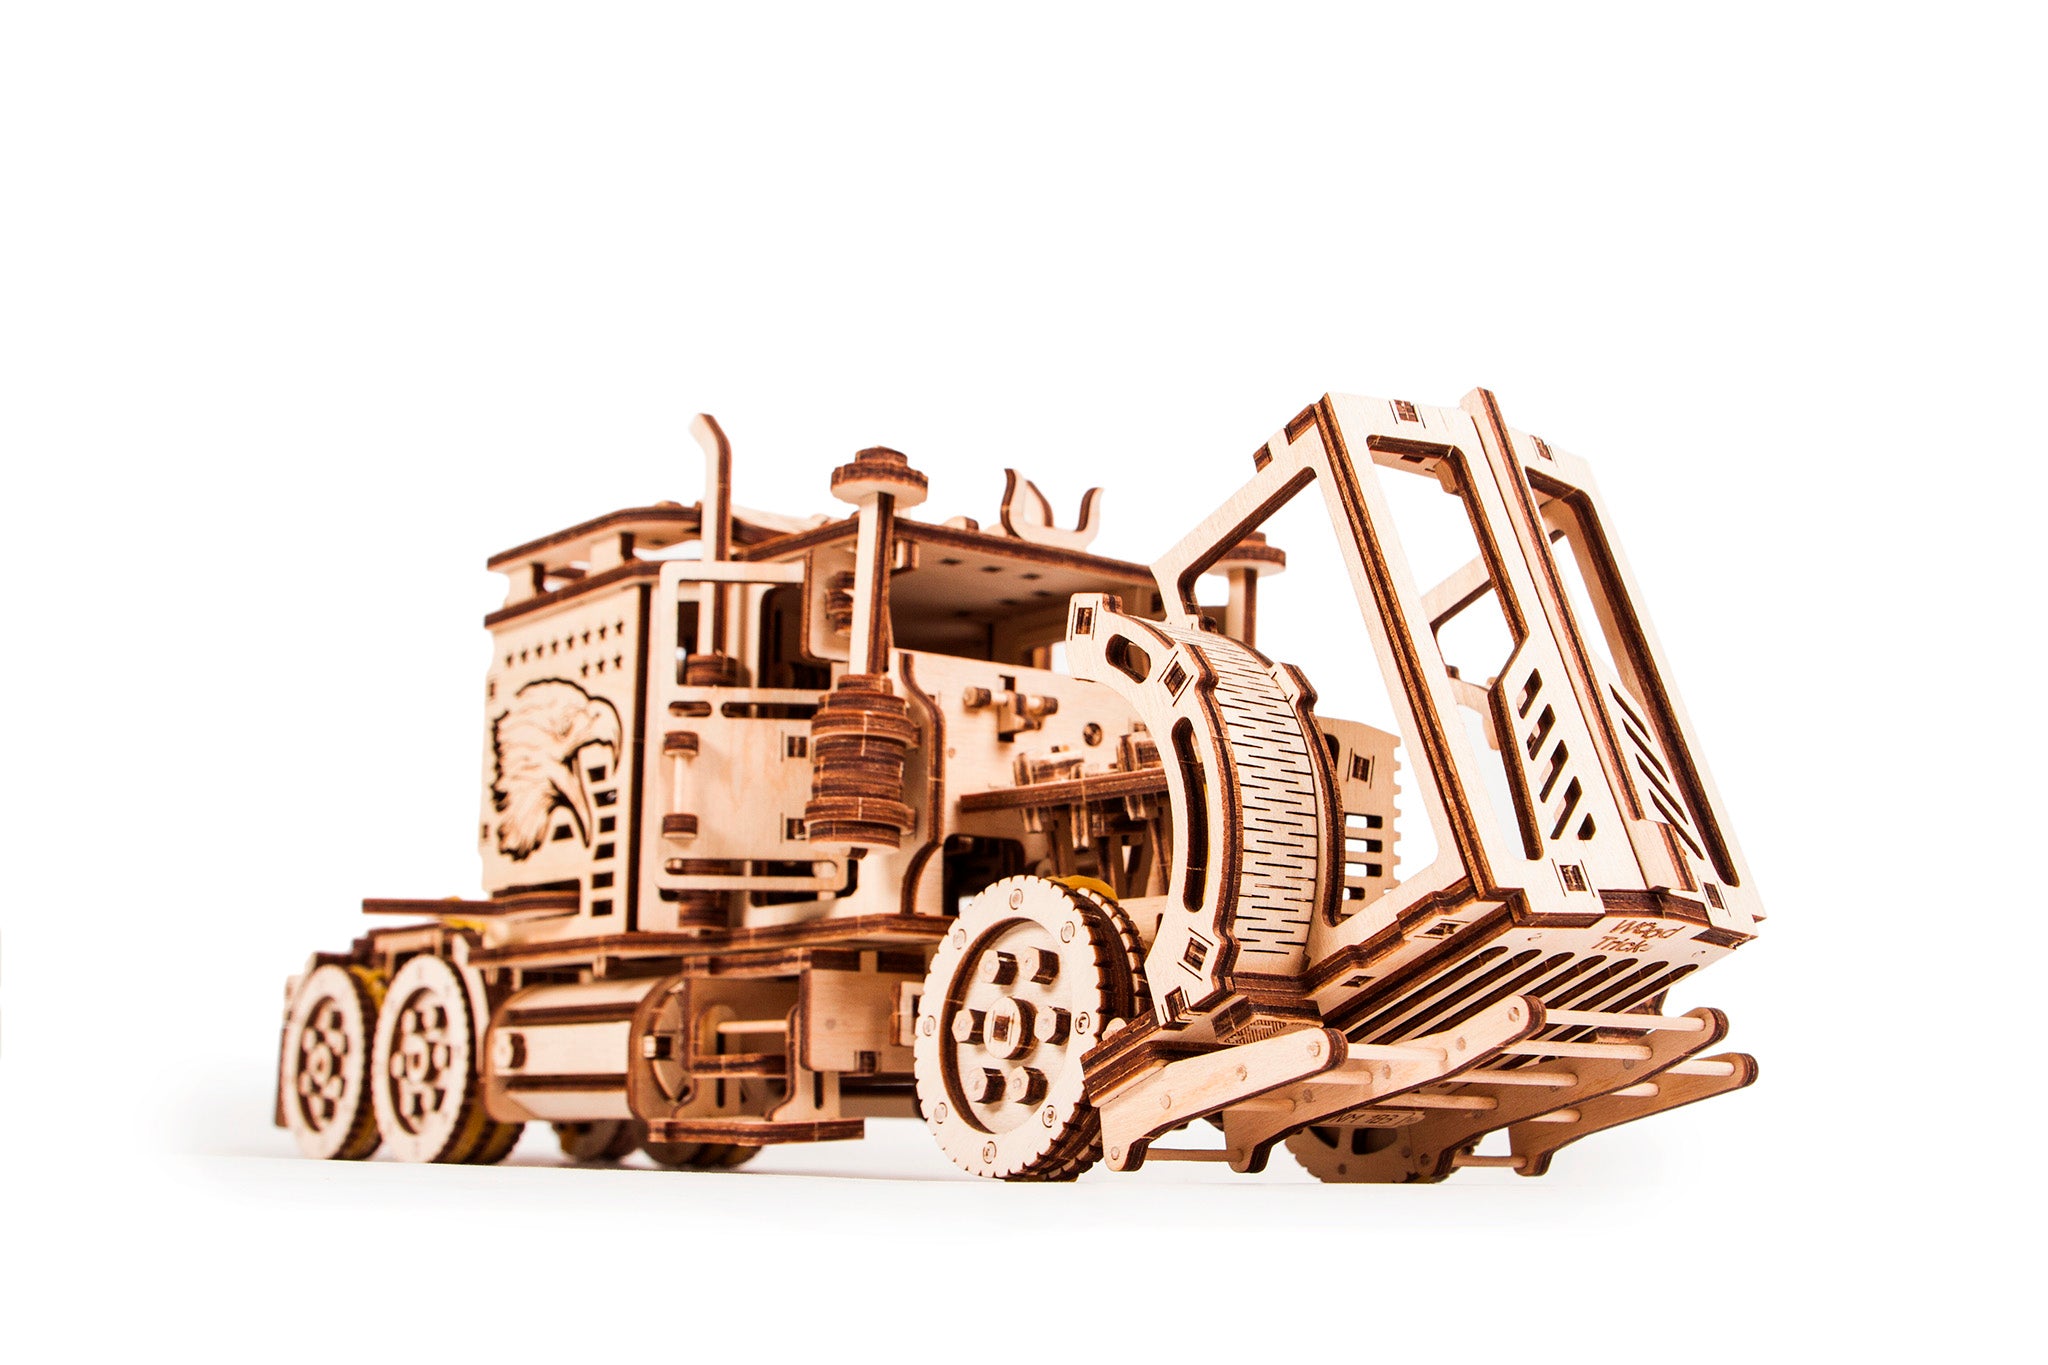 An impressive truck model to flex your brain.